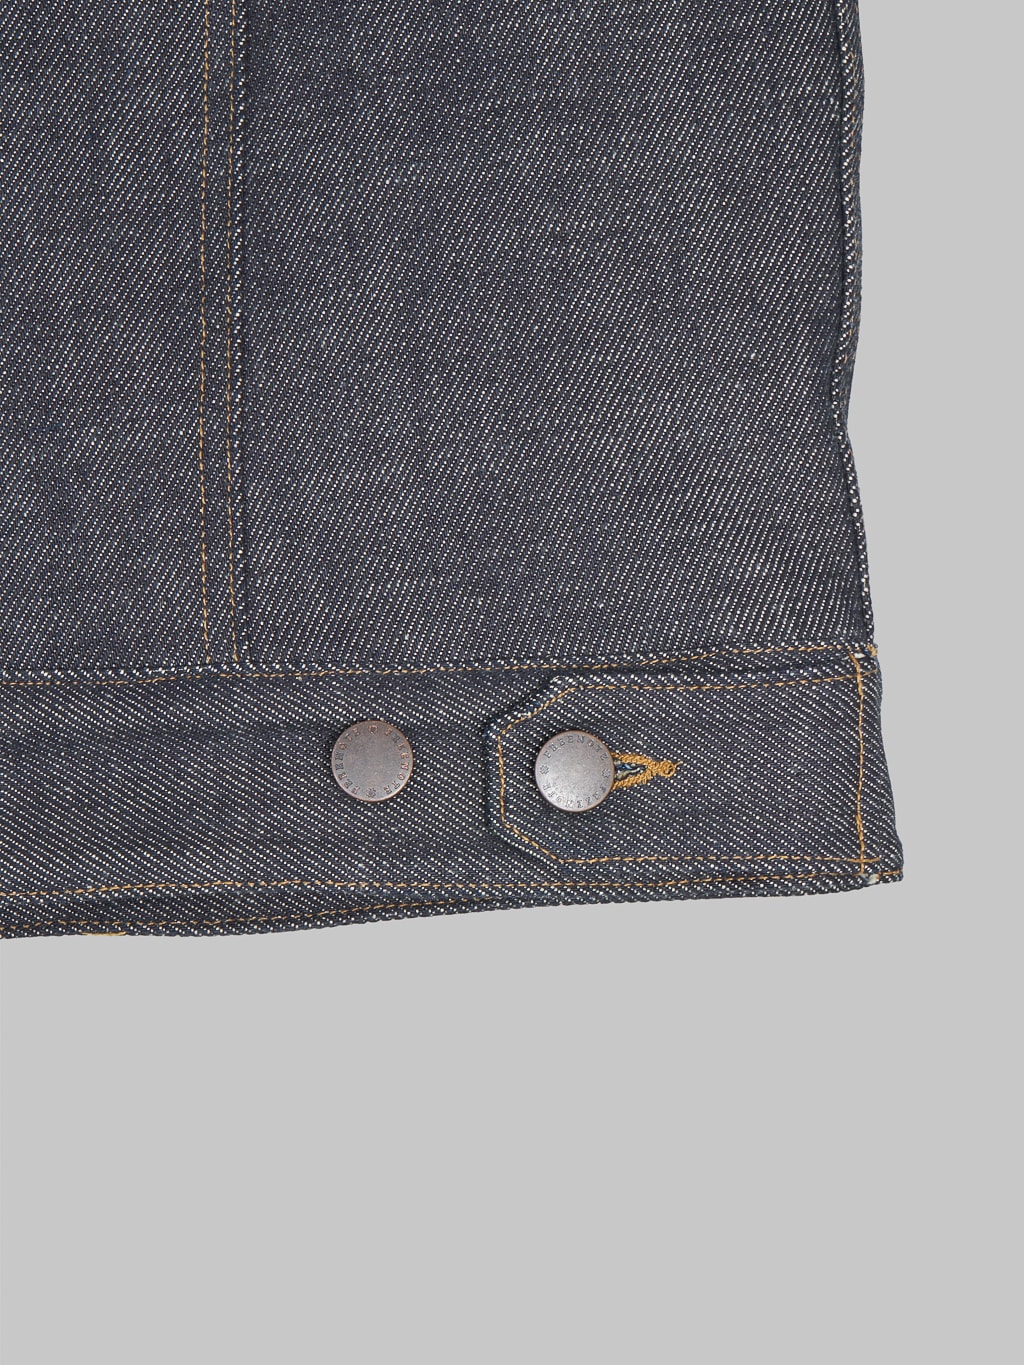 Freenote Cloth Denim Shearling Jacket waist band adjuster buttons